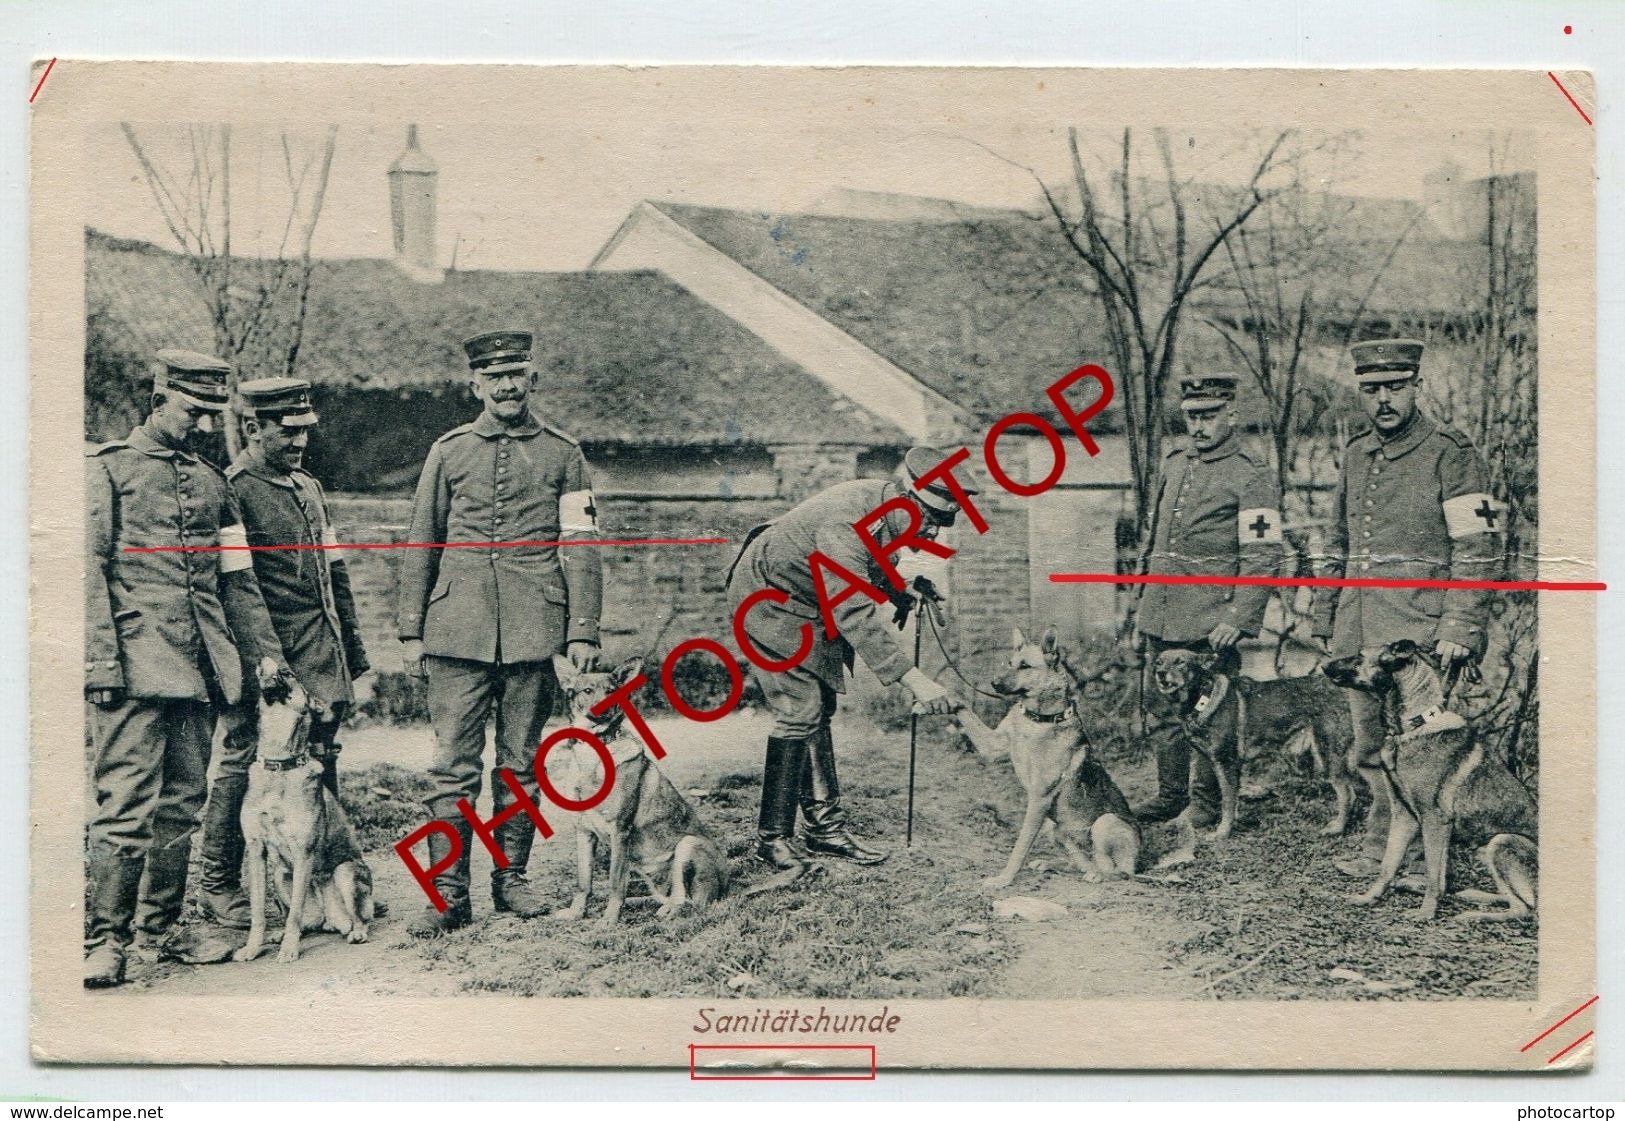 CHIENS Secouristes-Croix Rouge-NON SITUEE-CARTE Imprimee Allemande-Guerre 14-18-1 WK-Militaria-Feldpost - Guerre 1914-18